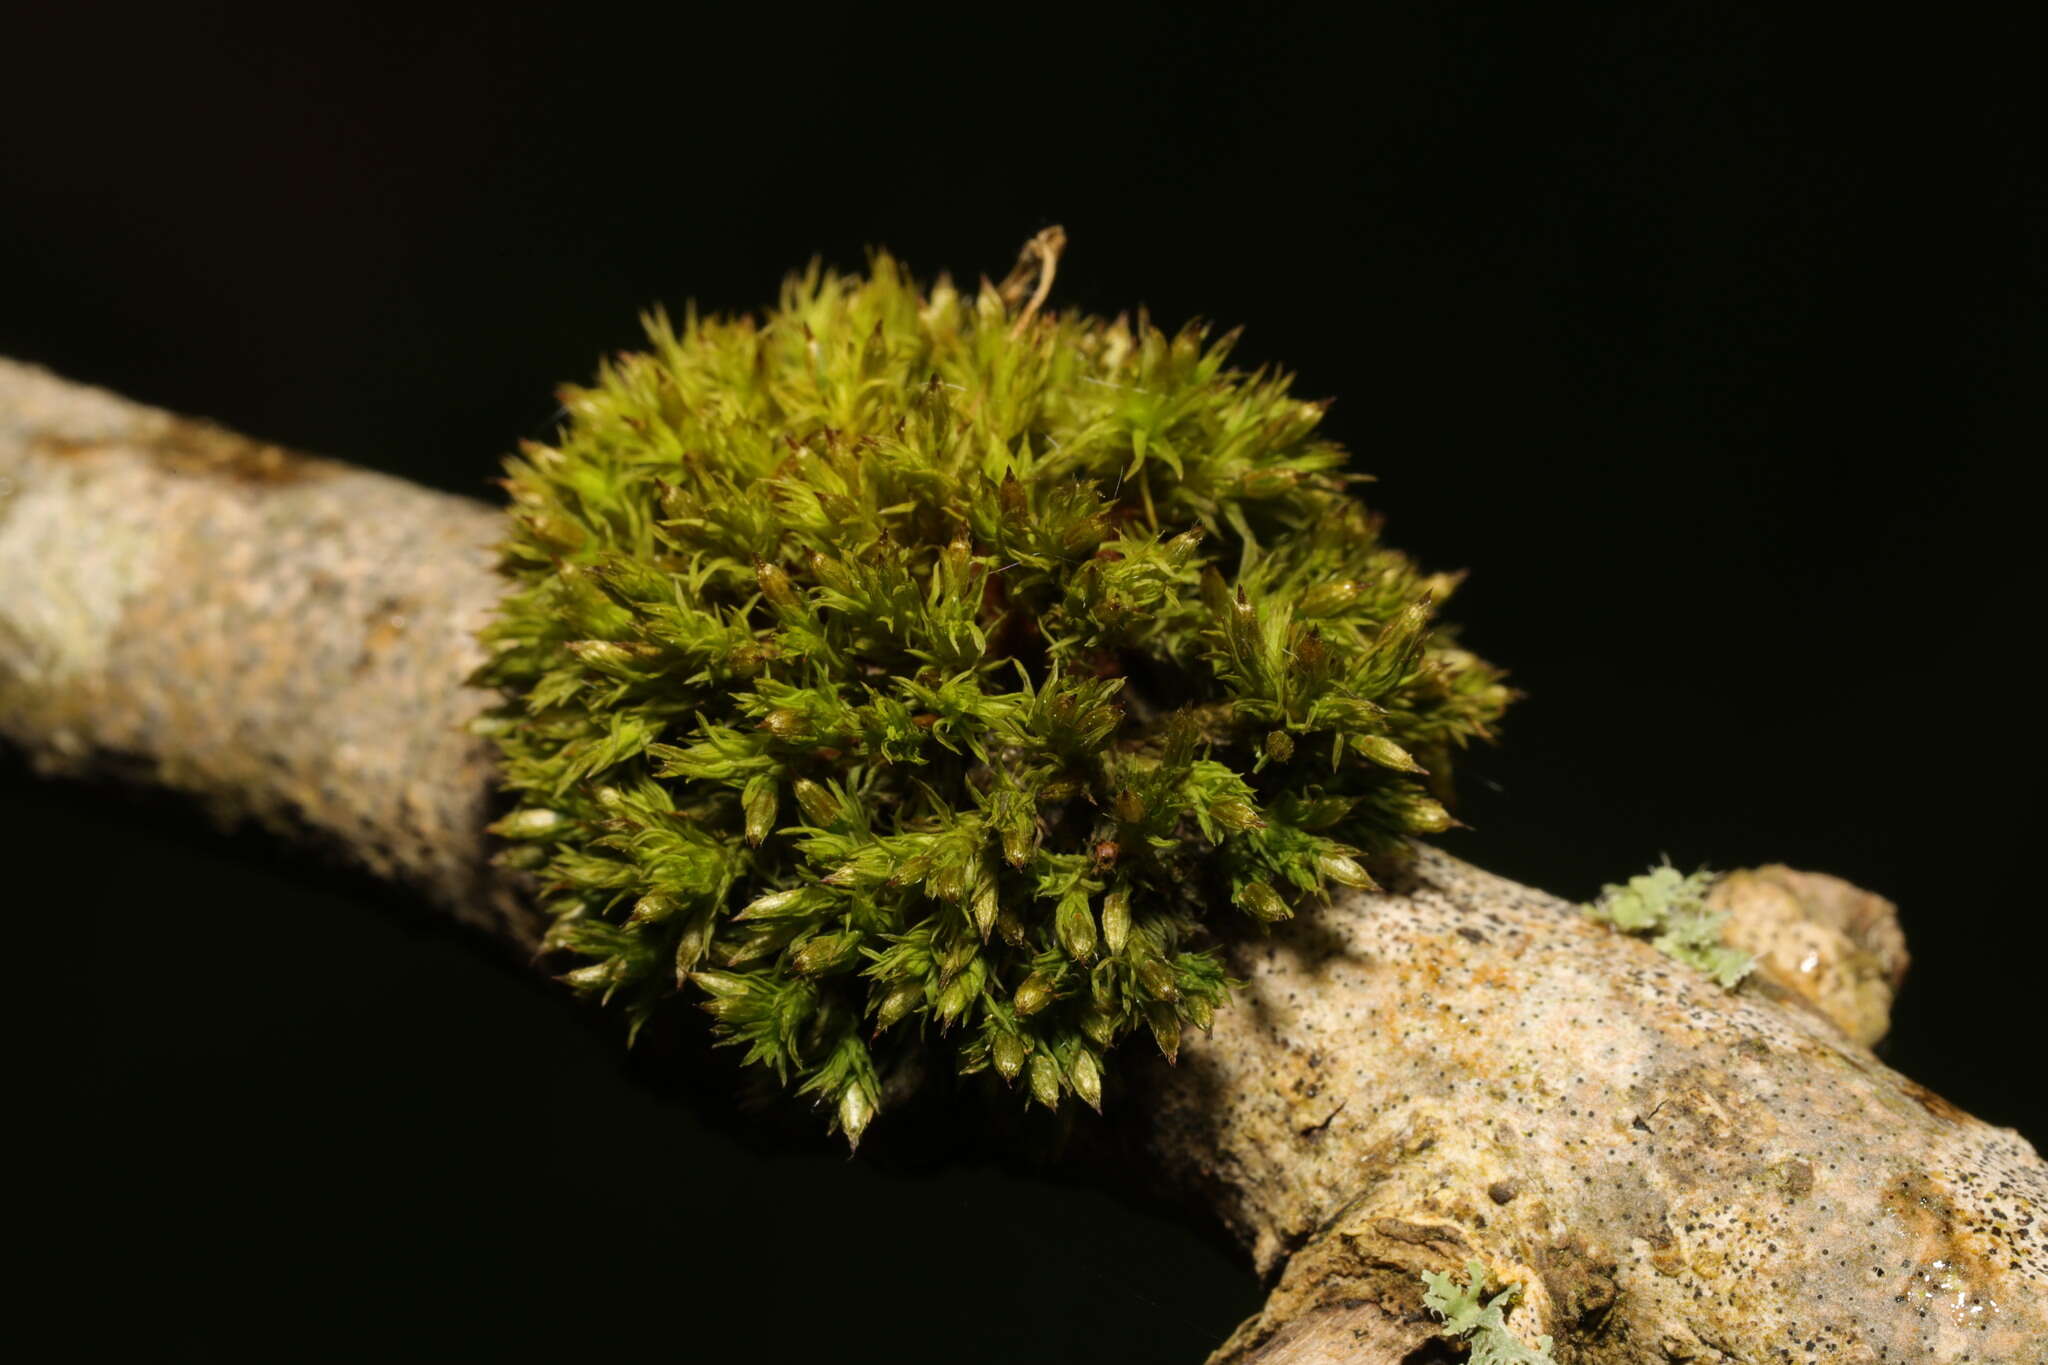 Image of straw bristle-moss